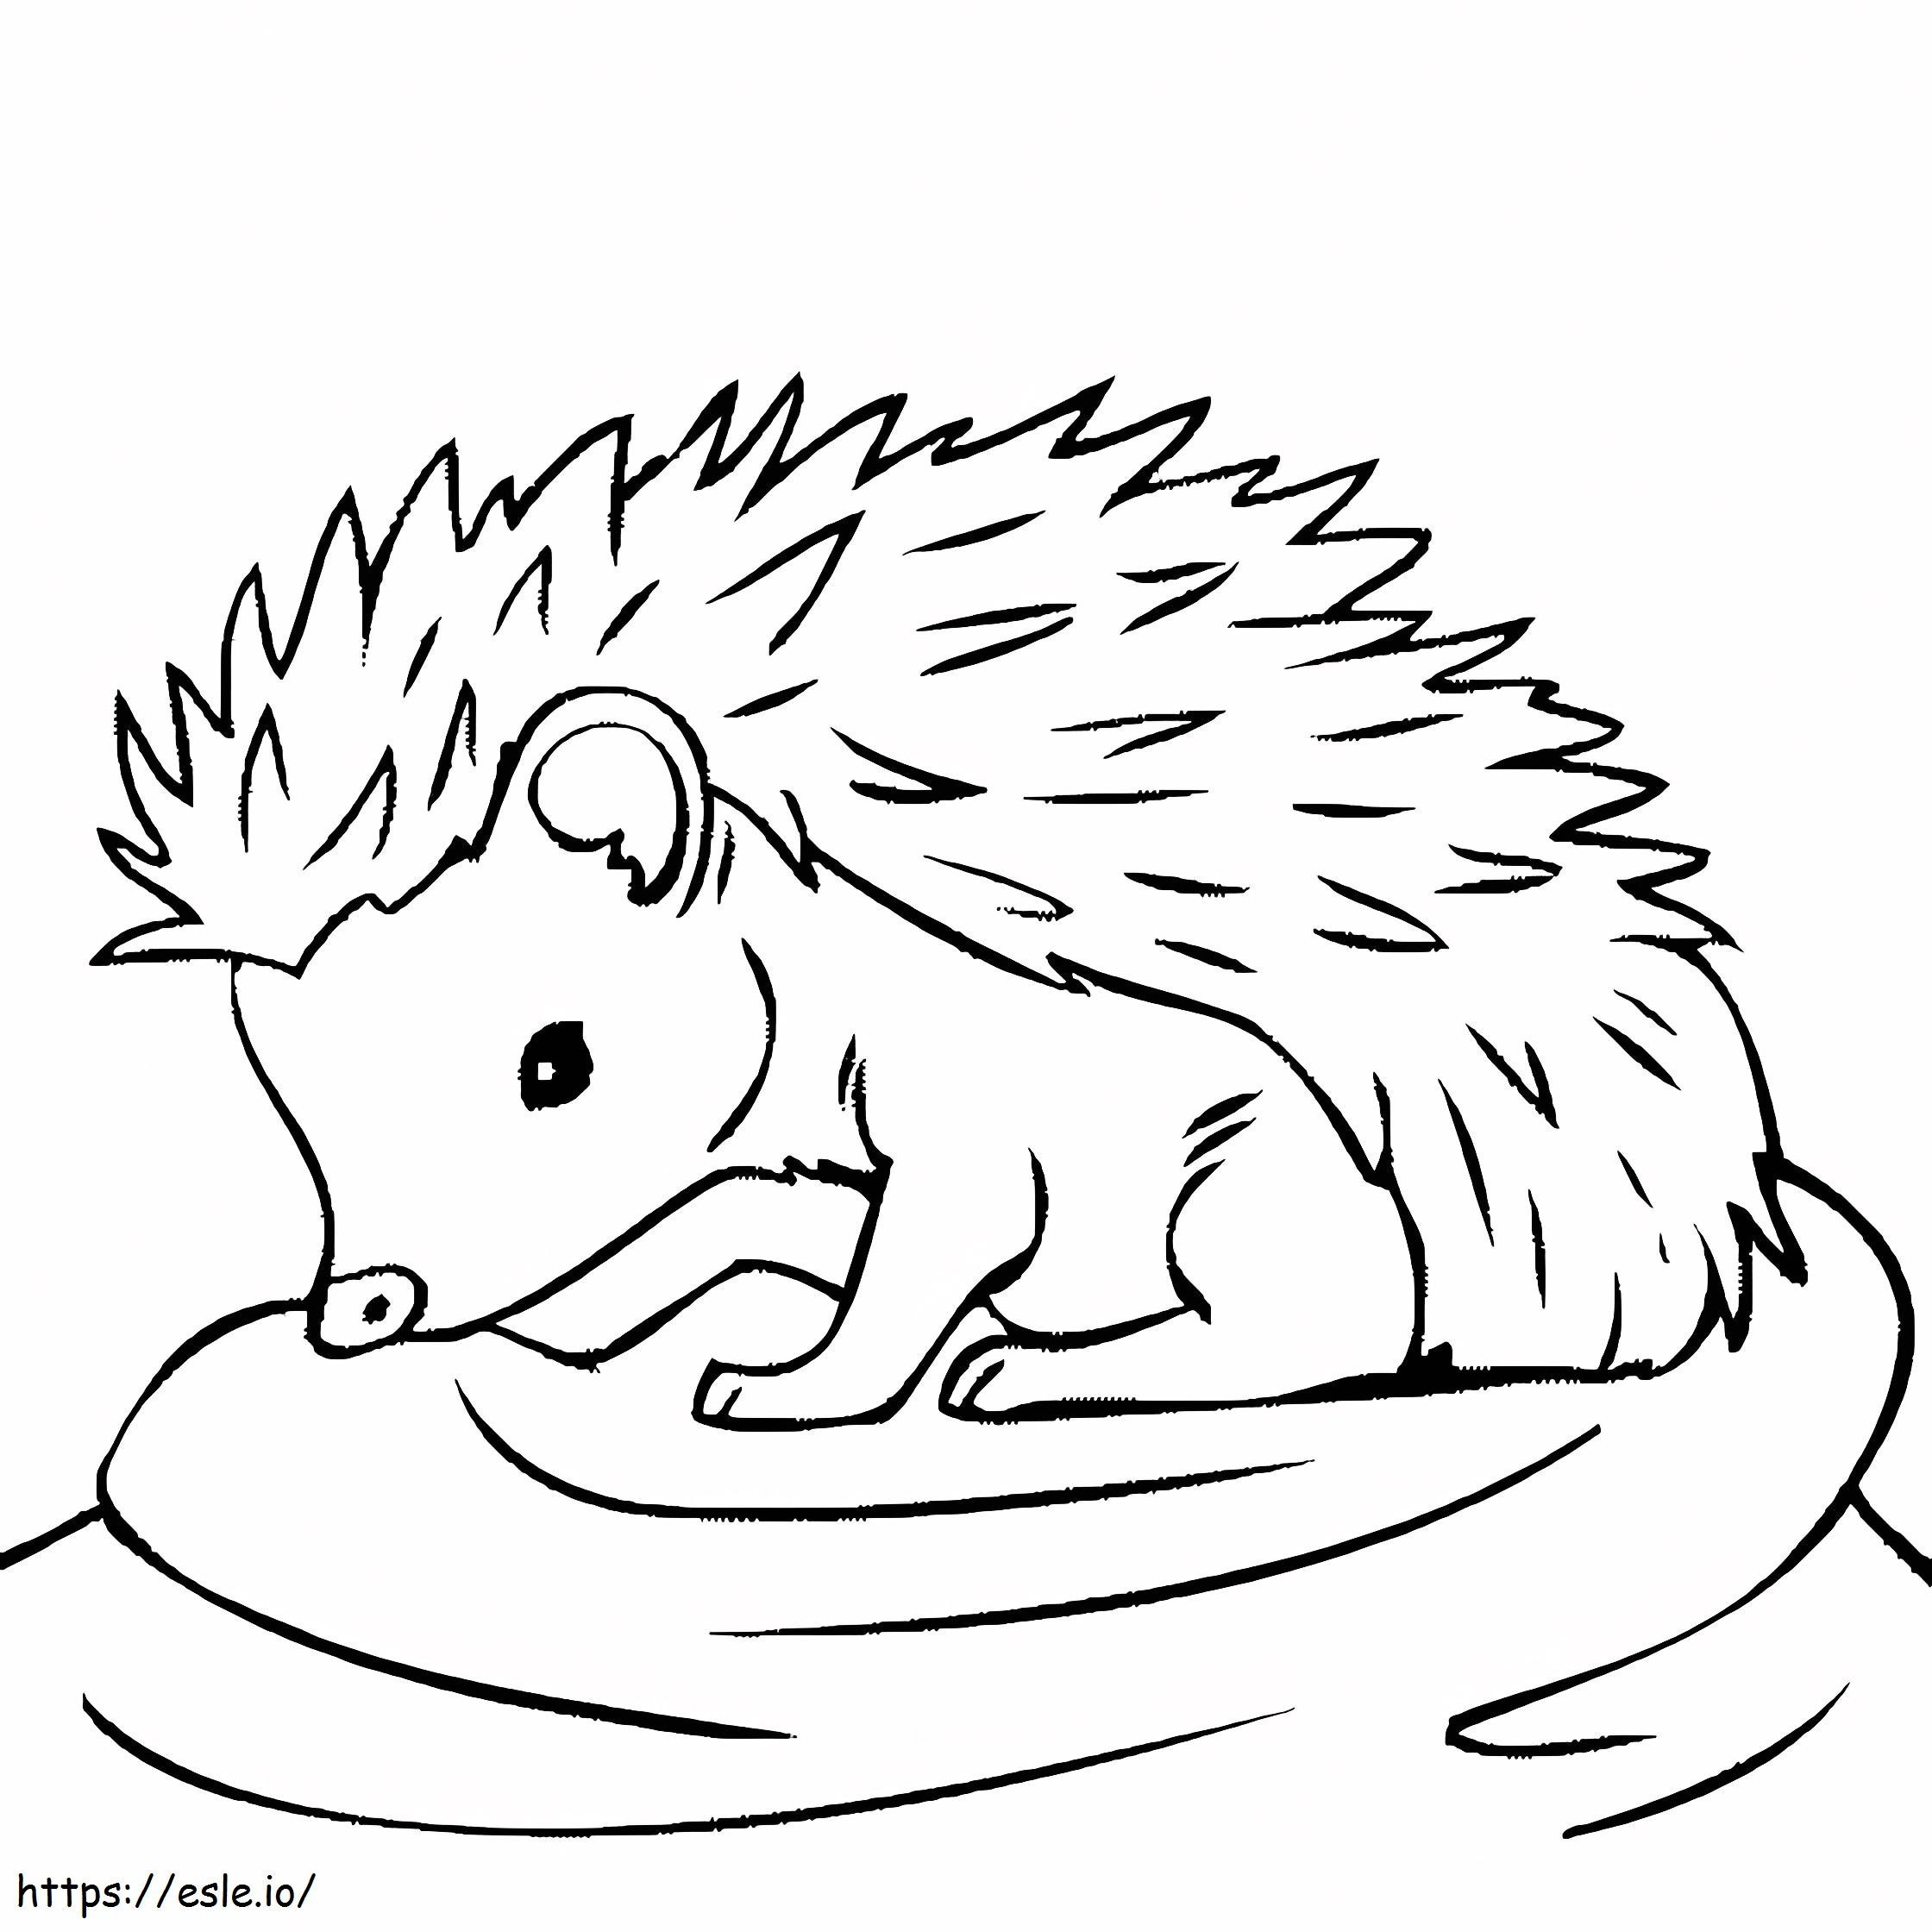 Baby Hedgehog coloring page